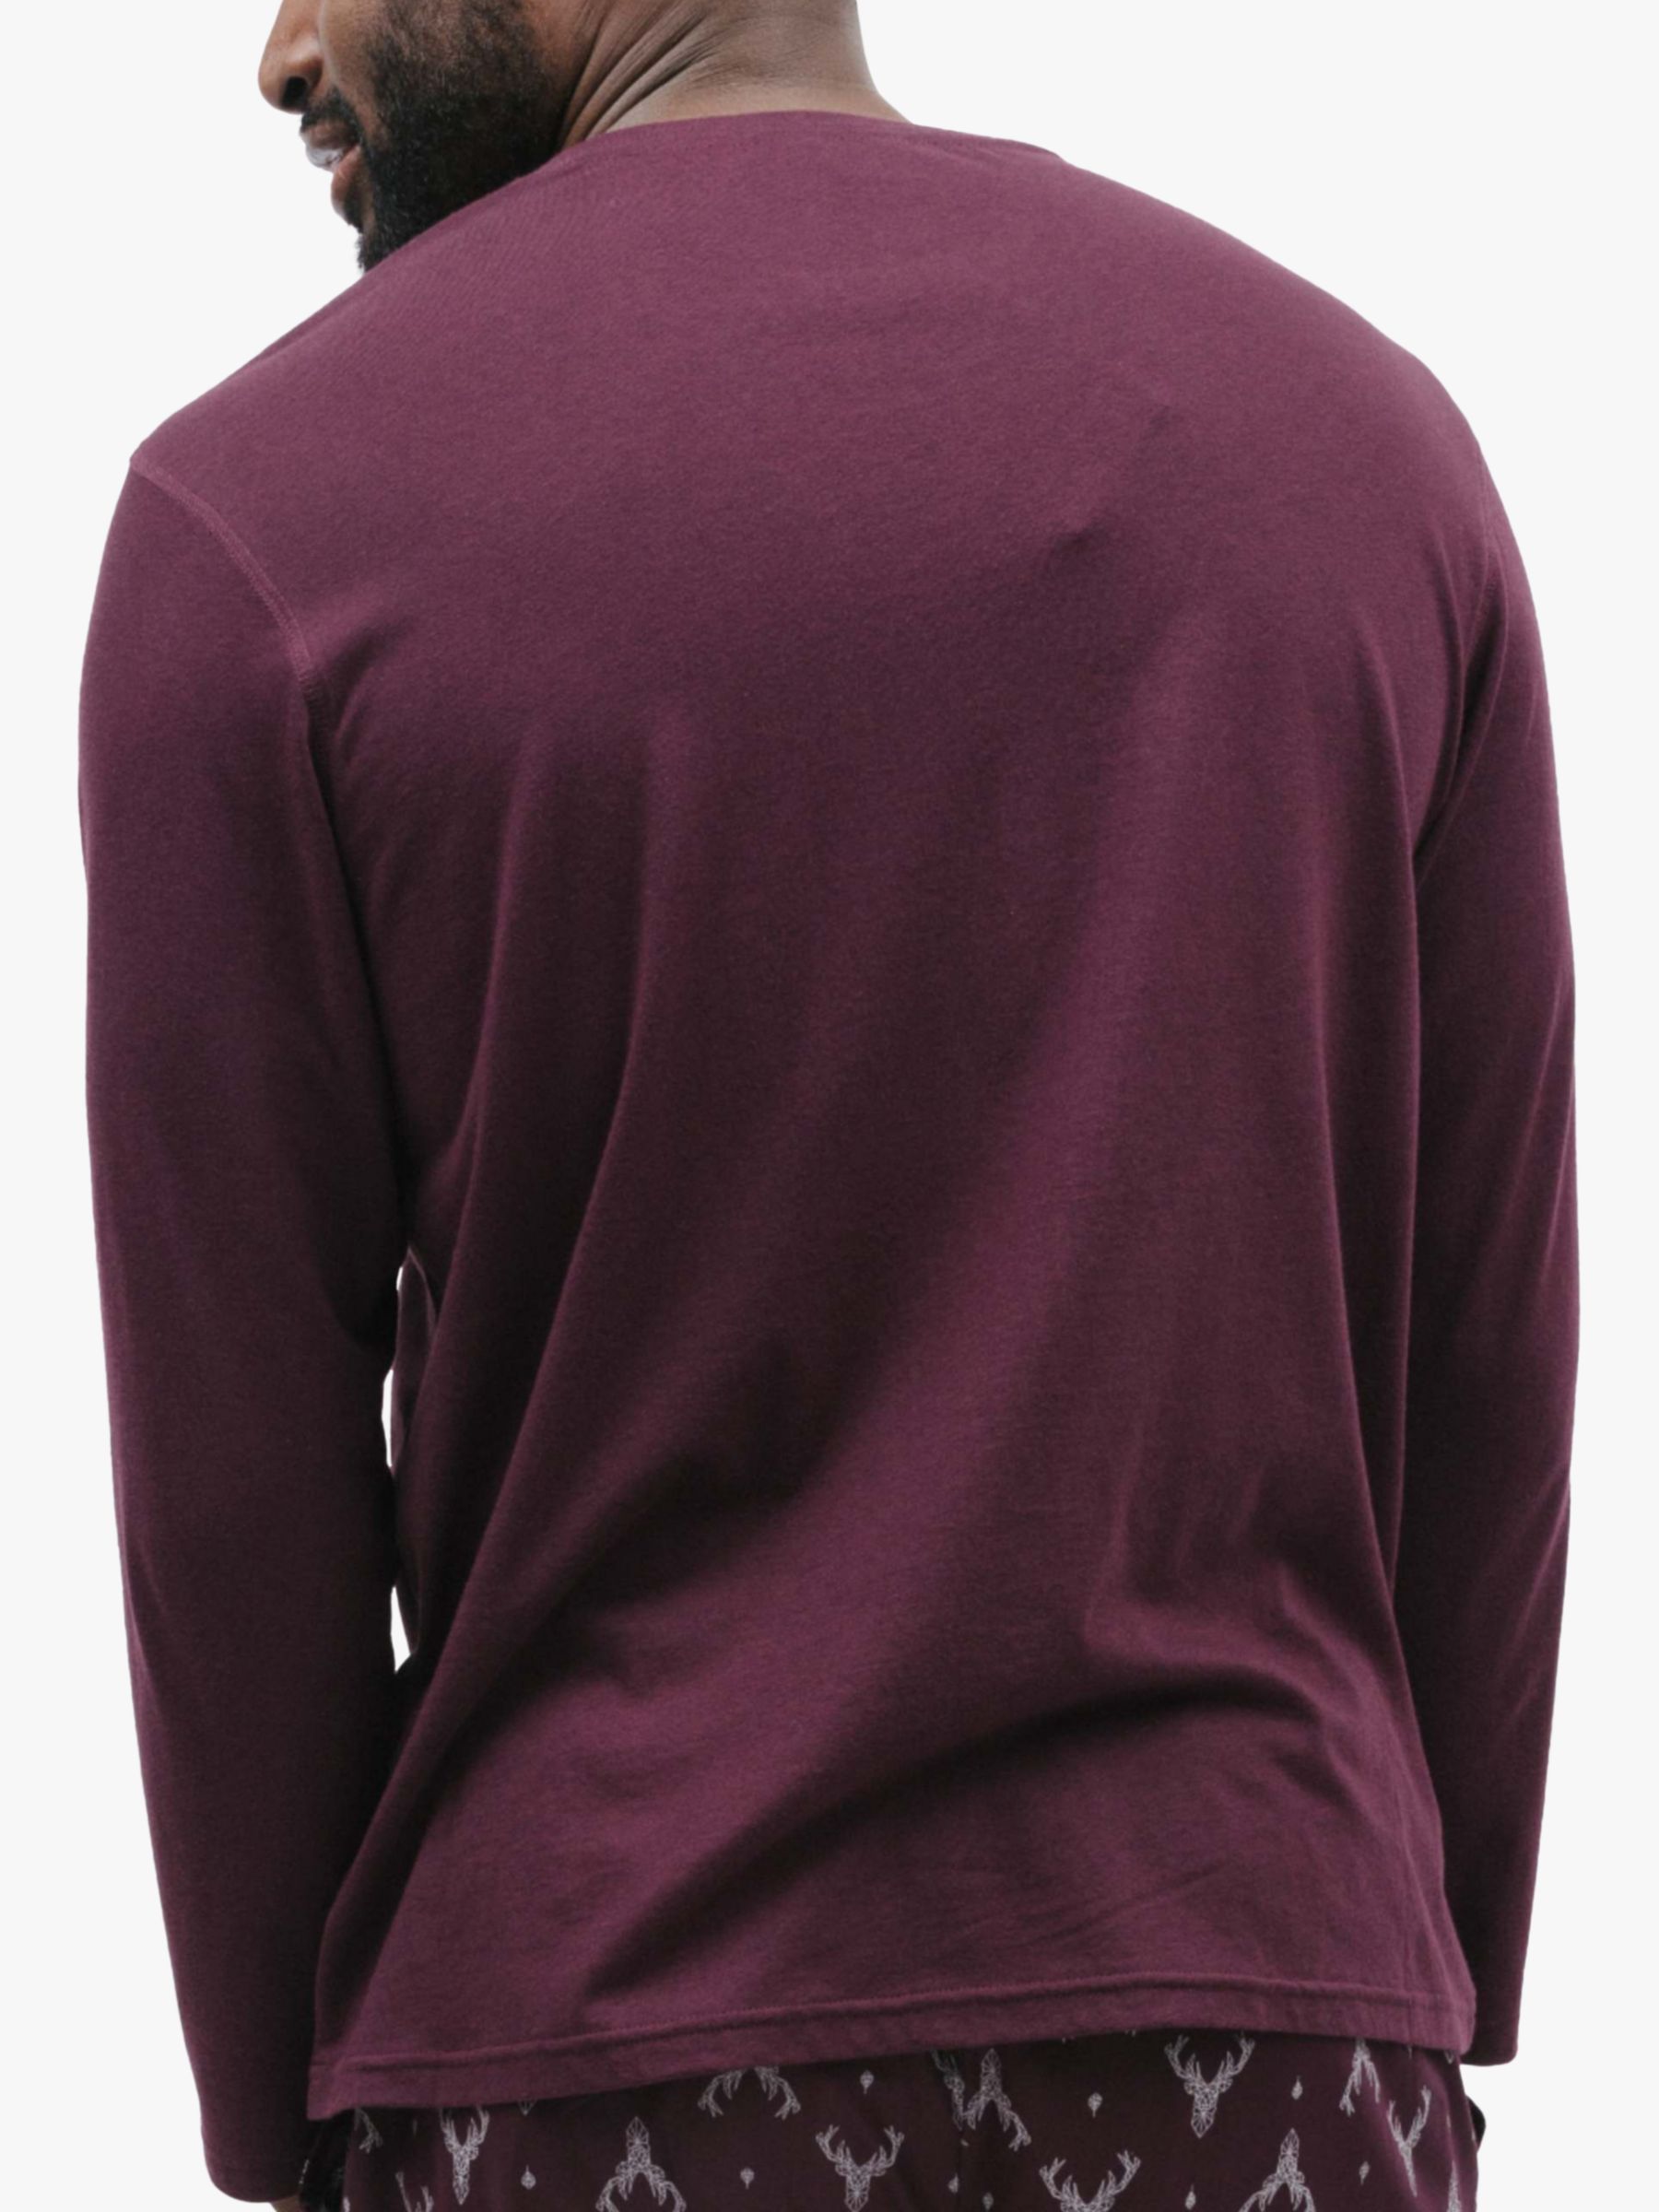 Cyberjammies Spencer Long Sleeve Jersey T-Shirt, Burgundy, S